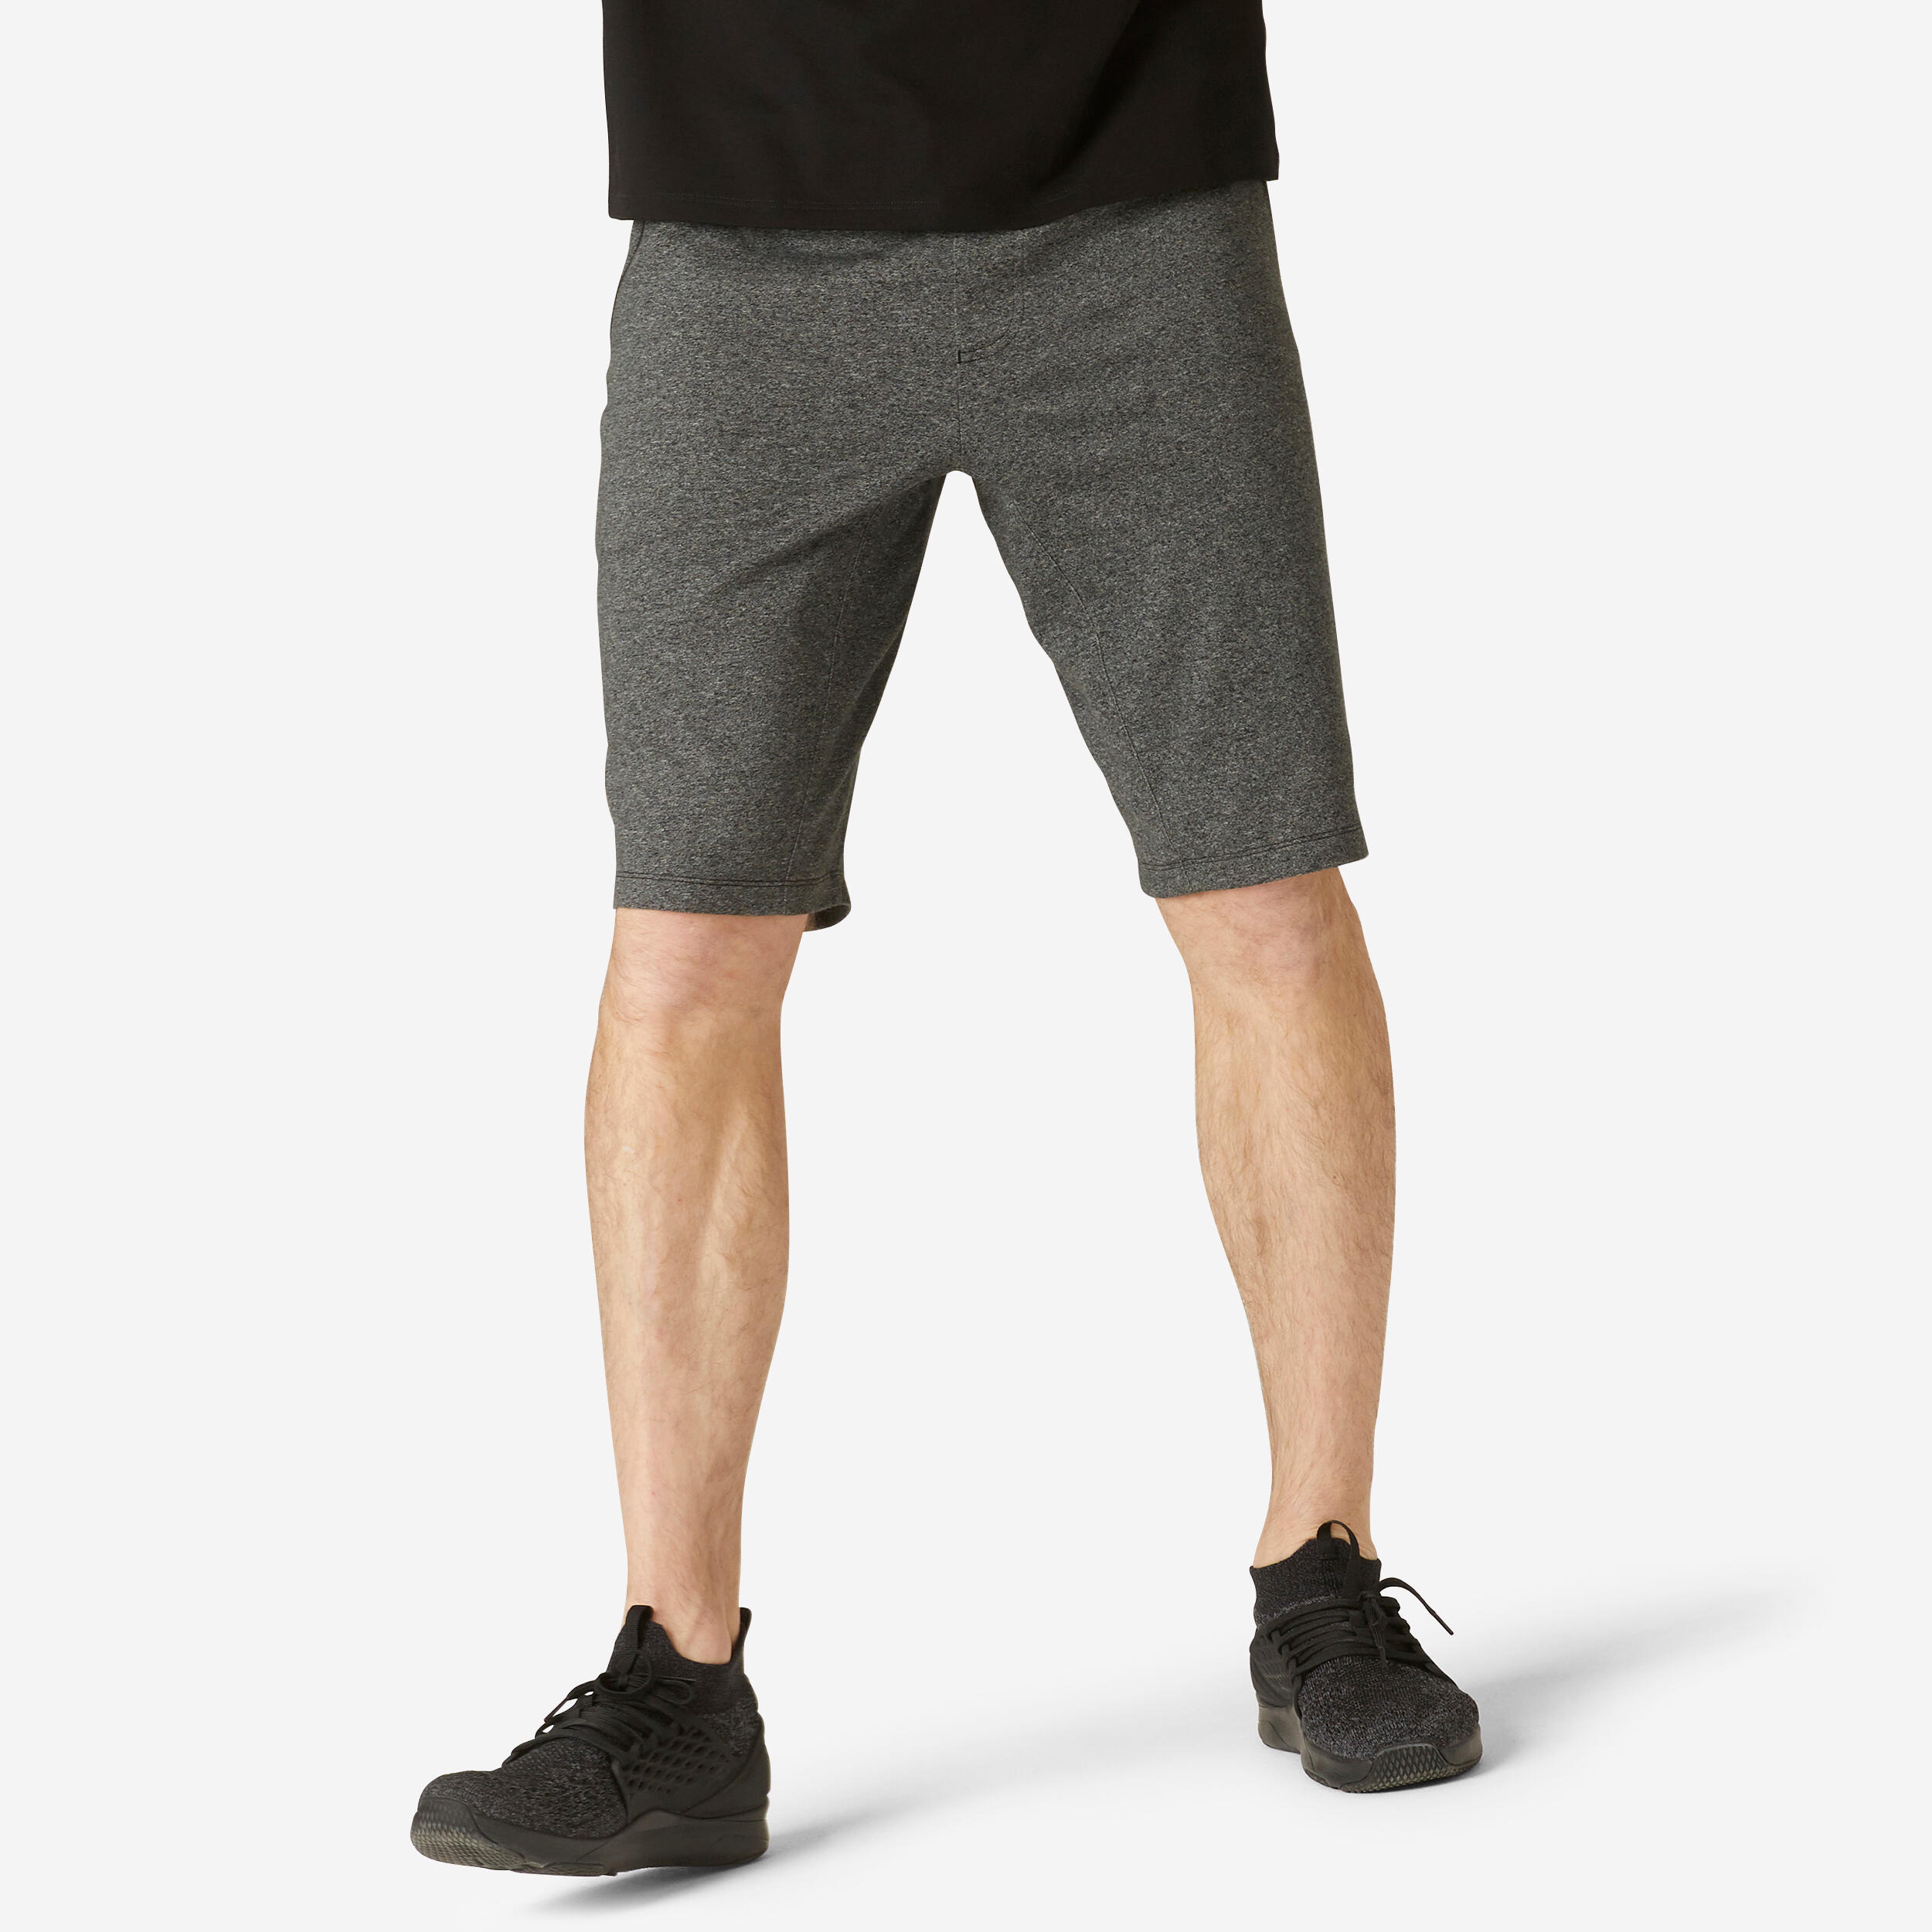 Men's Fitness Shorts 500 - Dark Grey 1/5